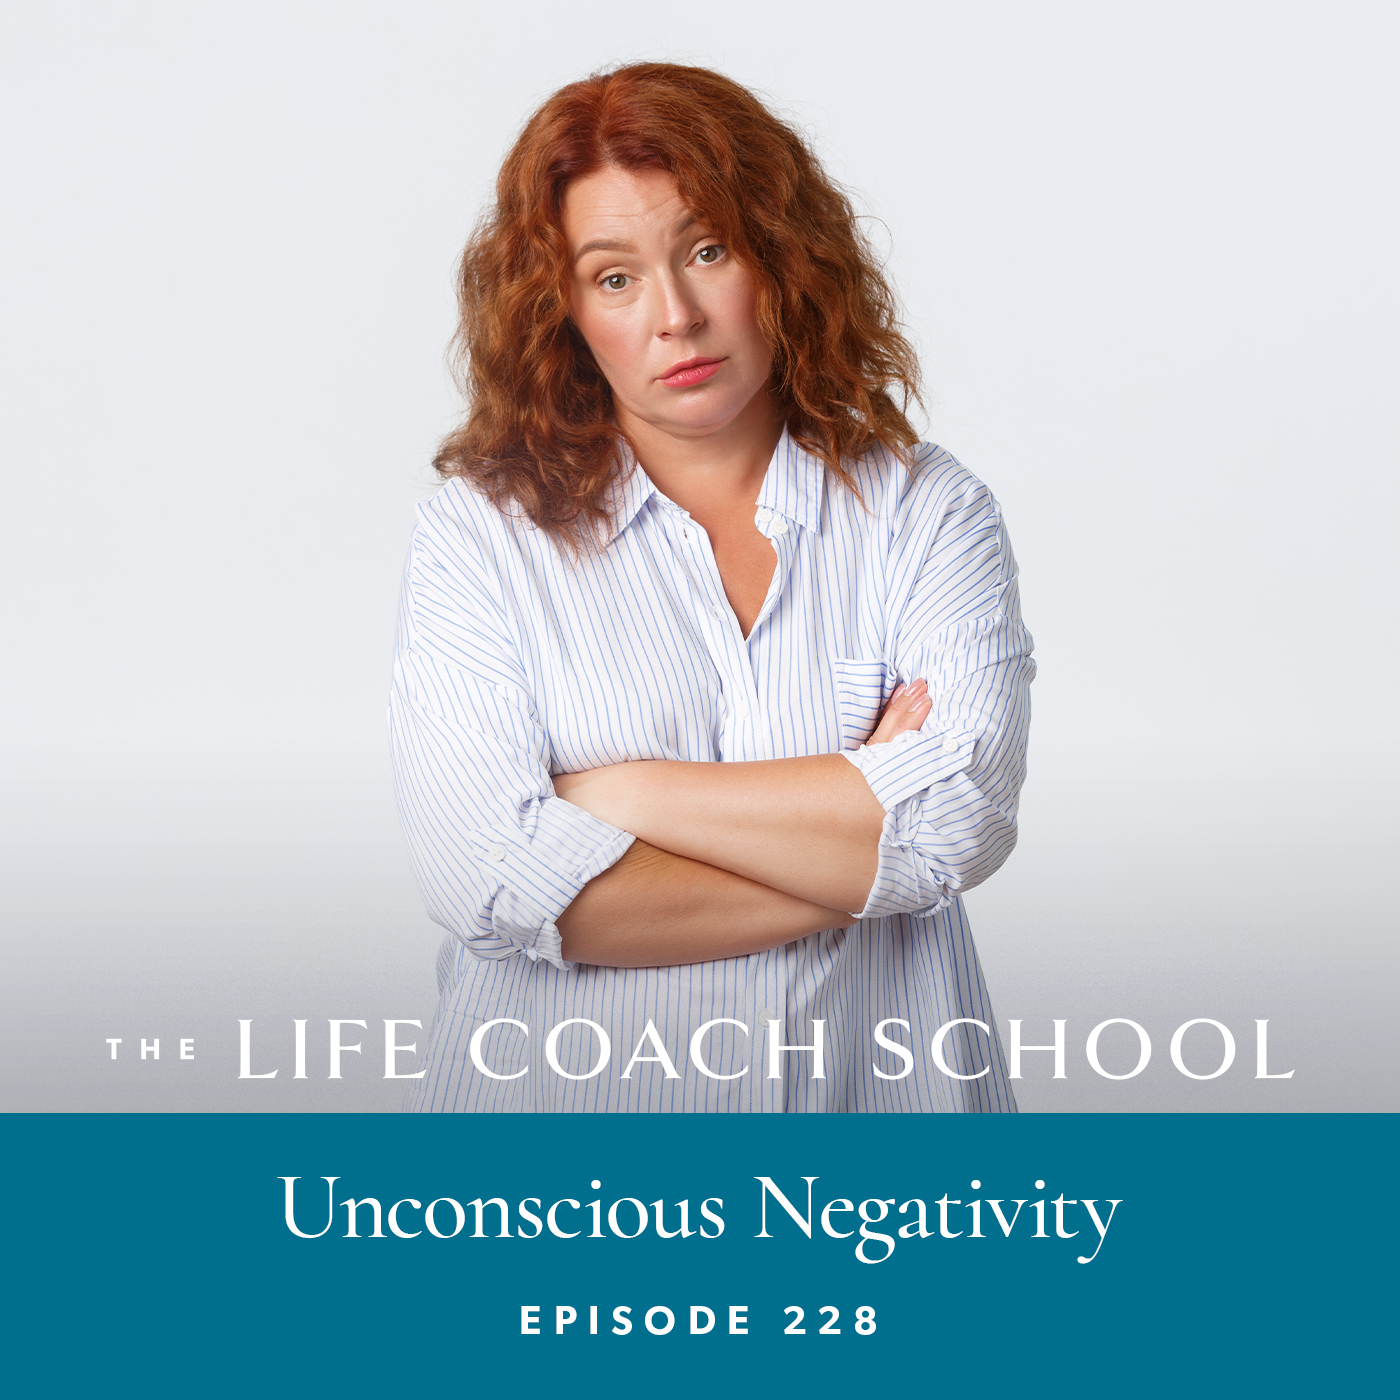 The Life Coach School Podcast with Brooke Castillo | Episode 228 | Unconscious Negativity